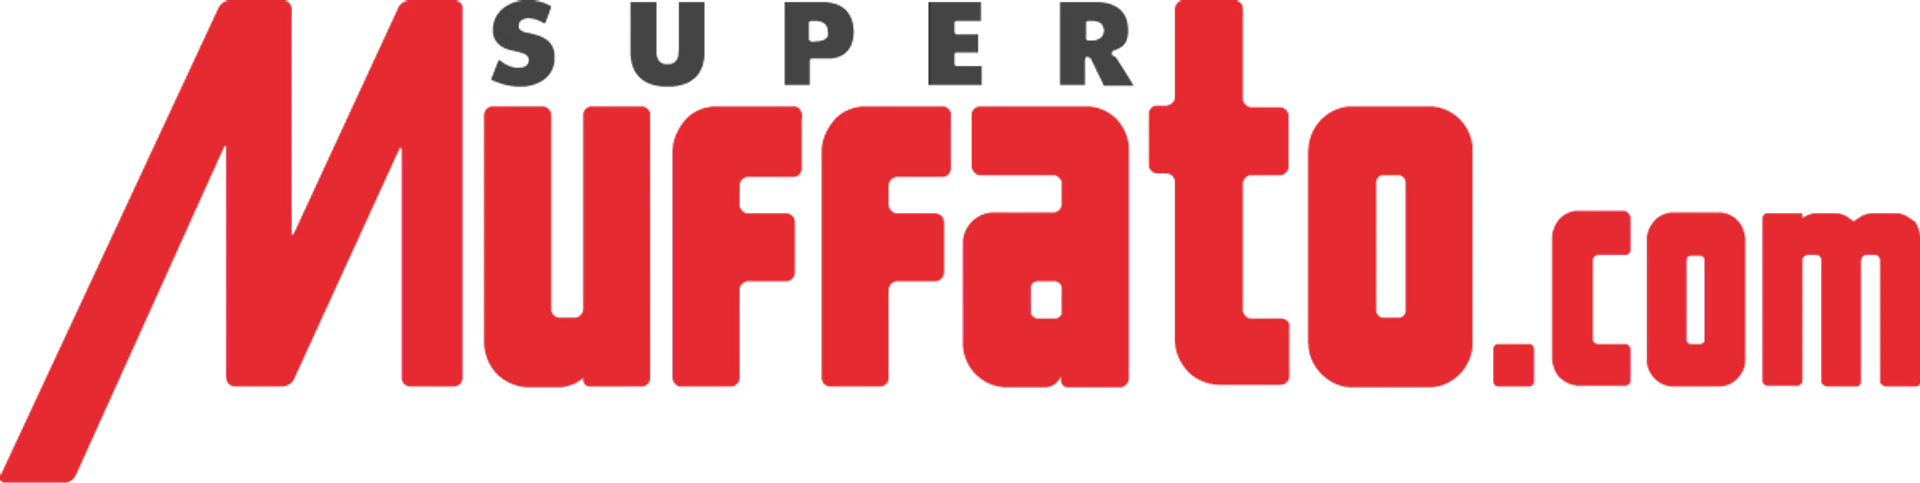 SUPER MUFFATO logo